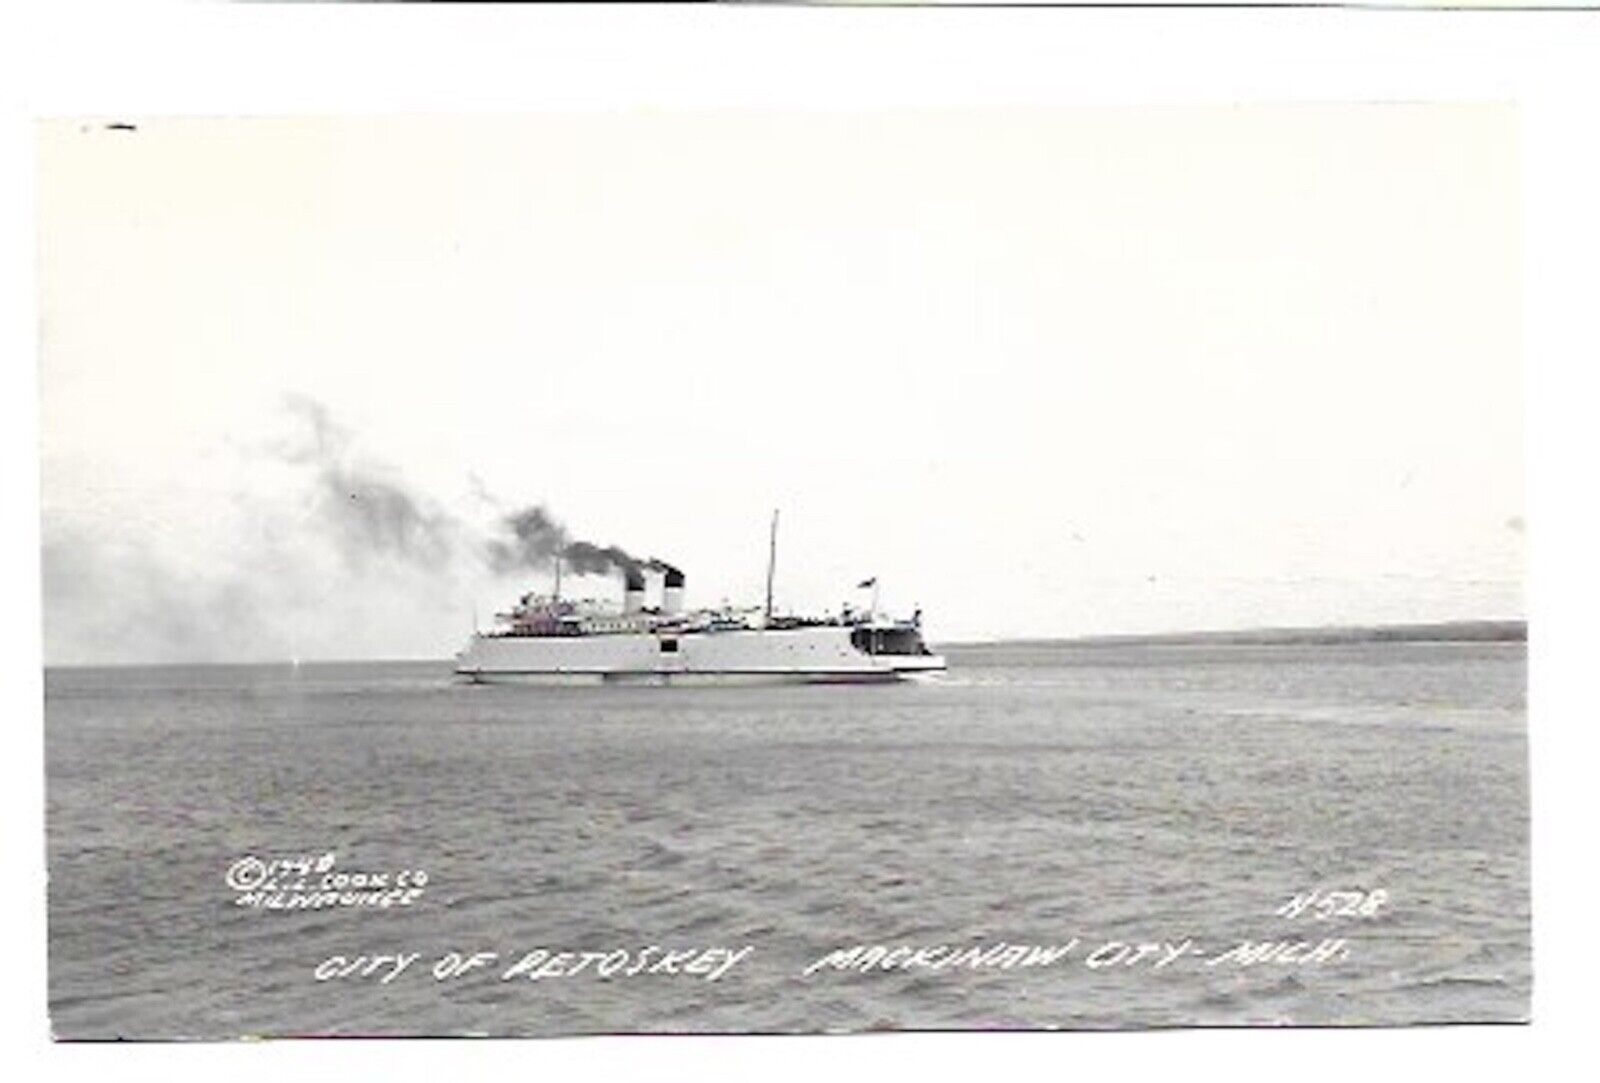 City of Petoskey, Mackinaw City,  MI. Ferryboat, Photo Post Card Postcard PC203